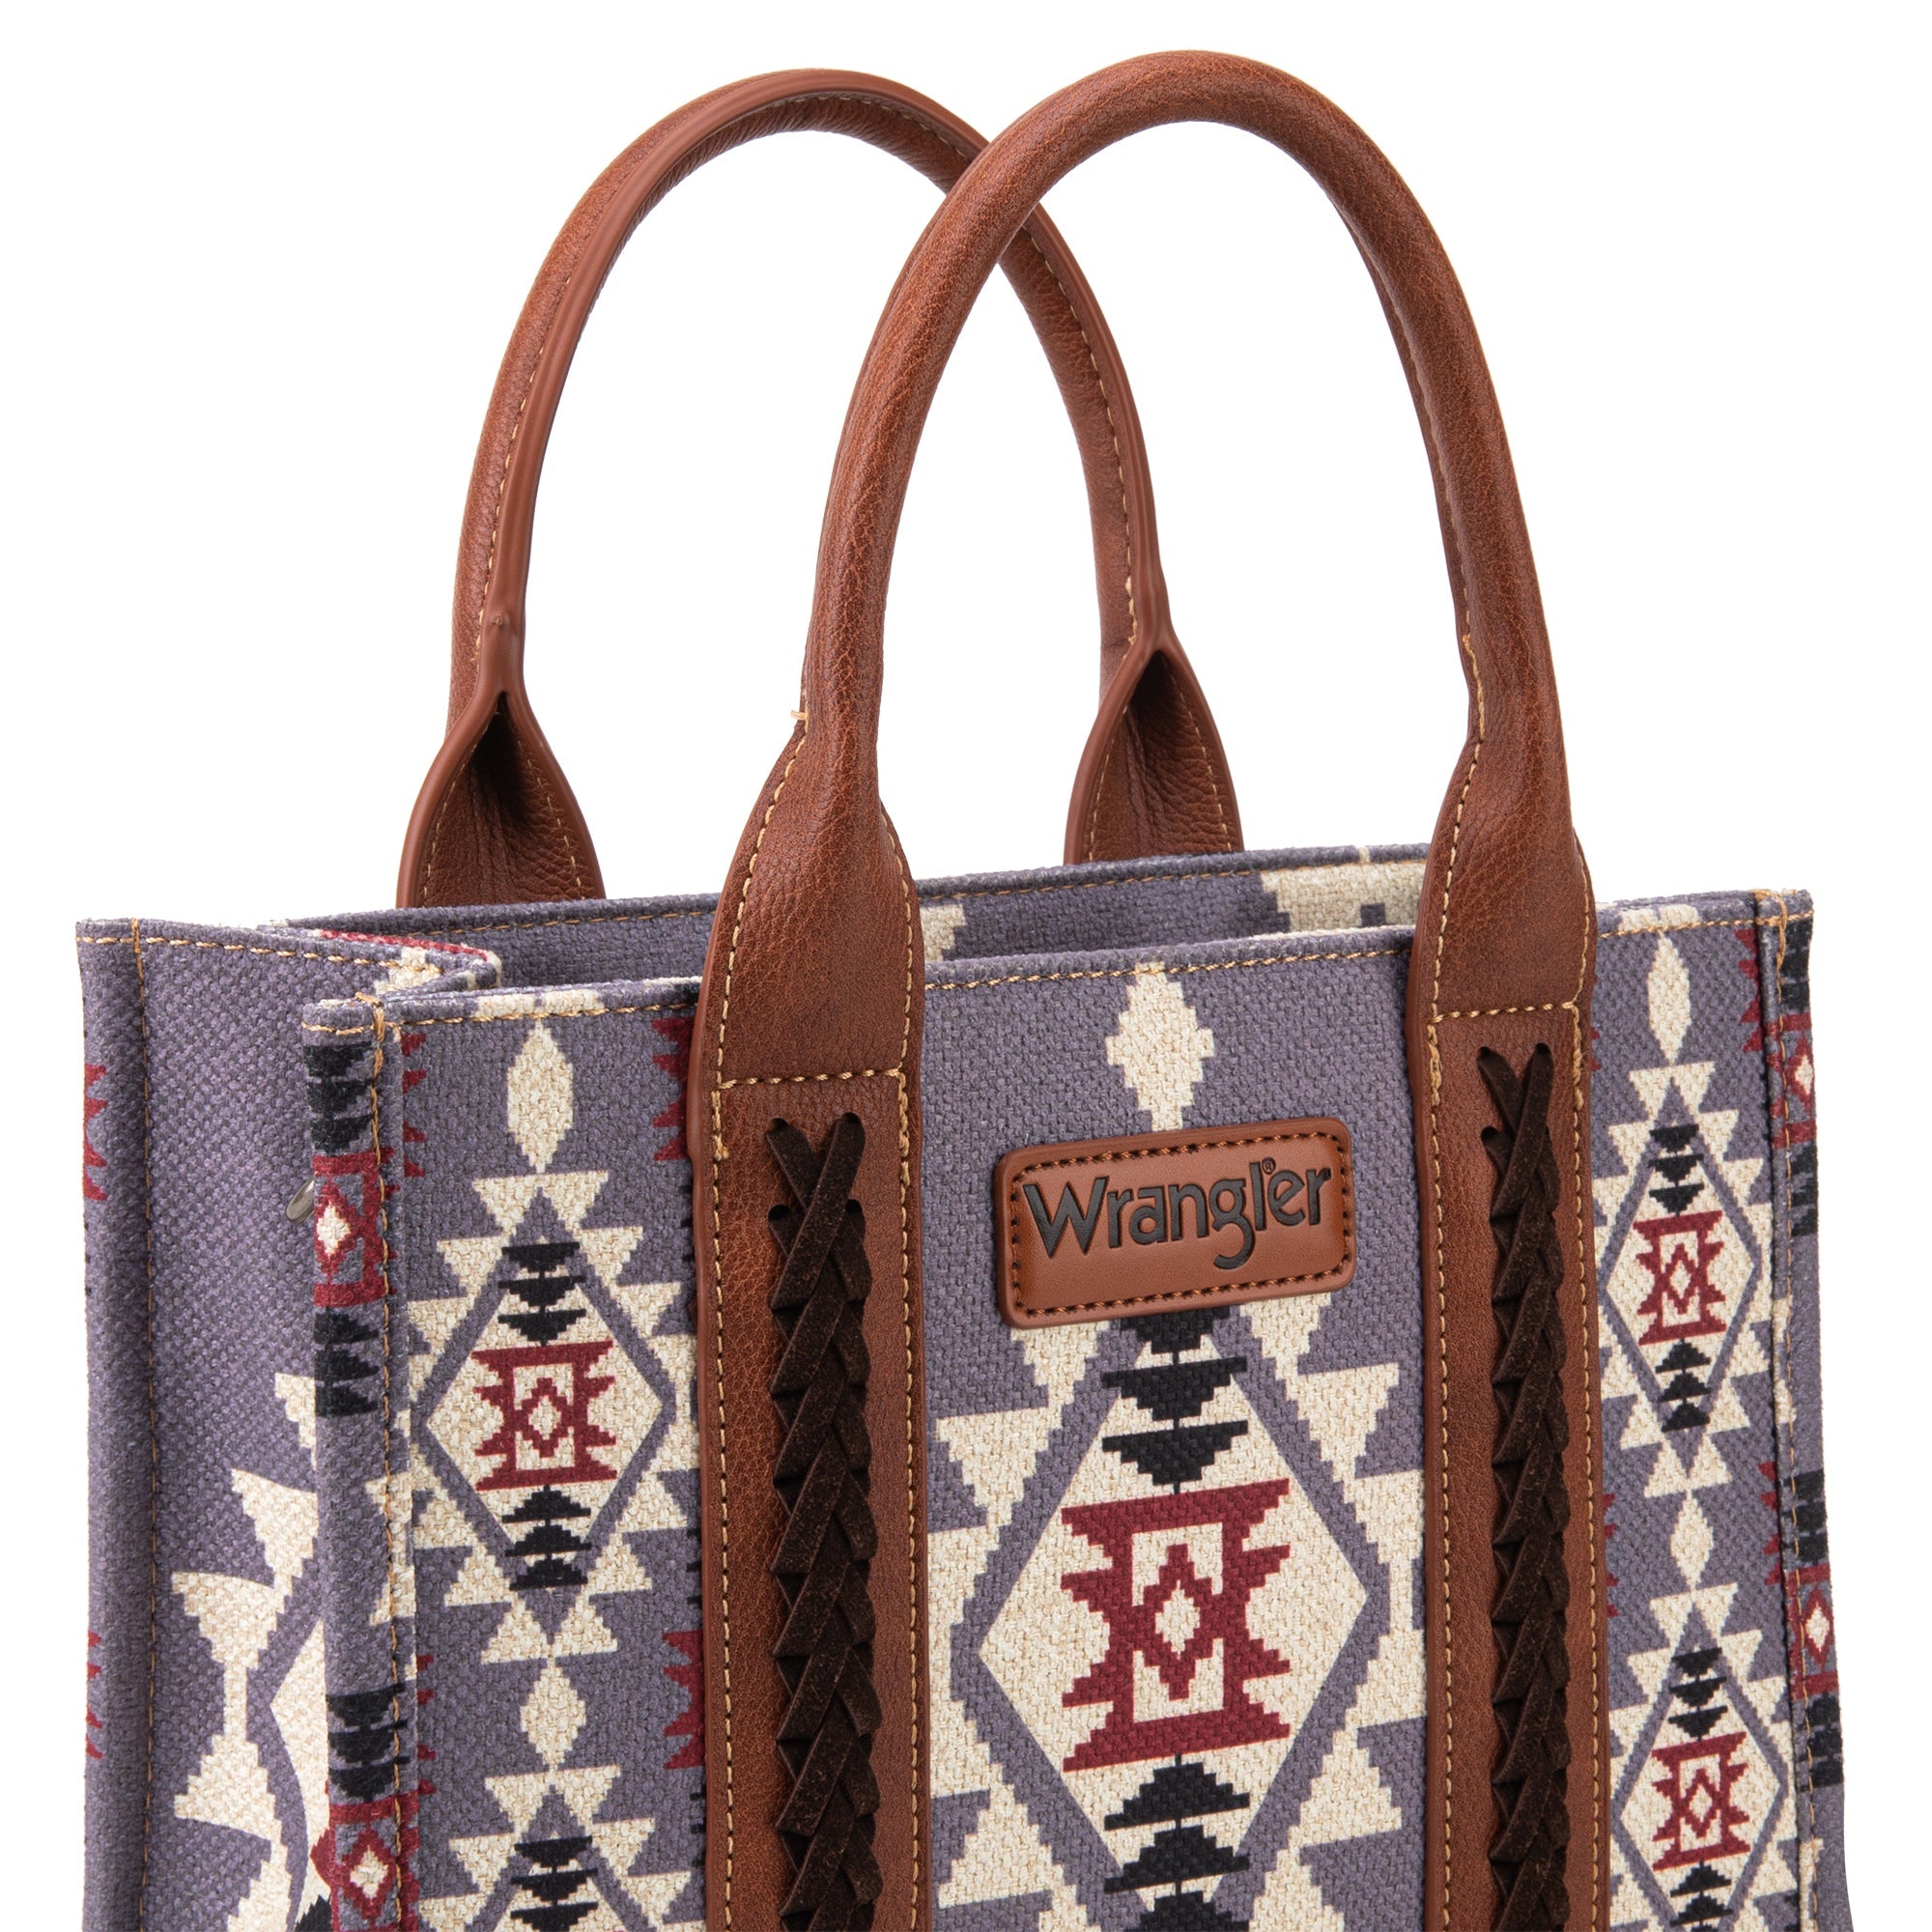  Xdwdcdaq Canvas Tote Bag With Zipper 13x15 In Autumn